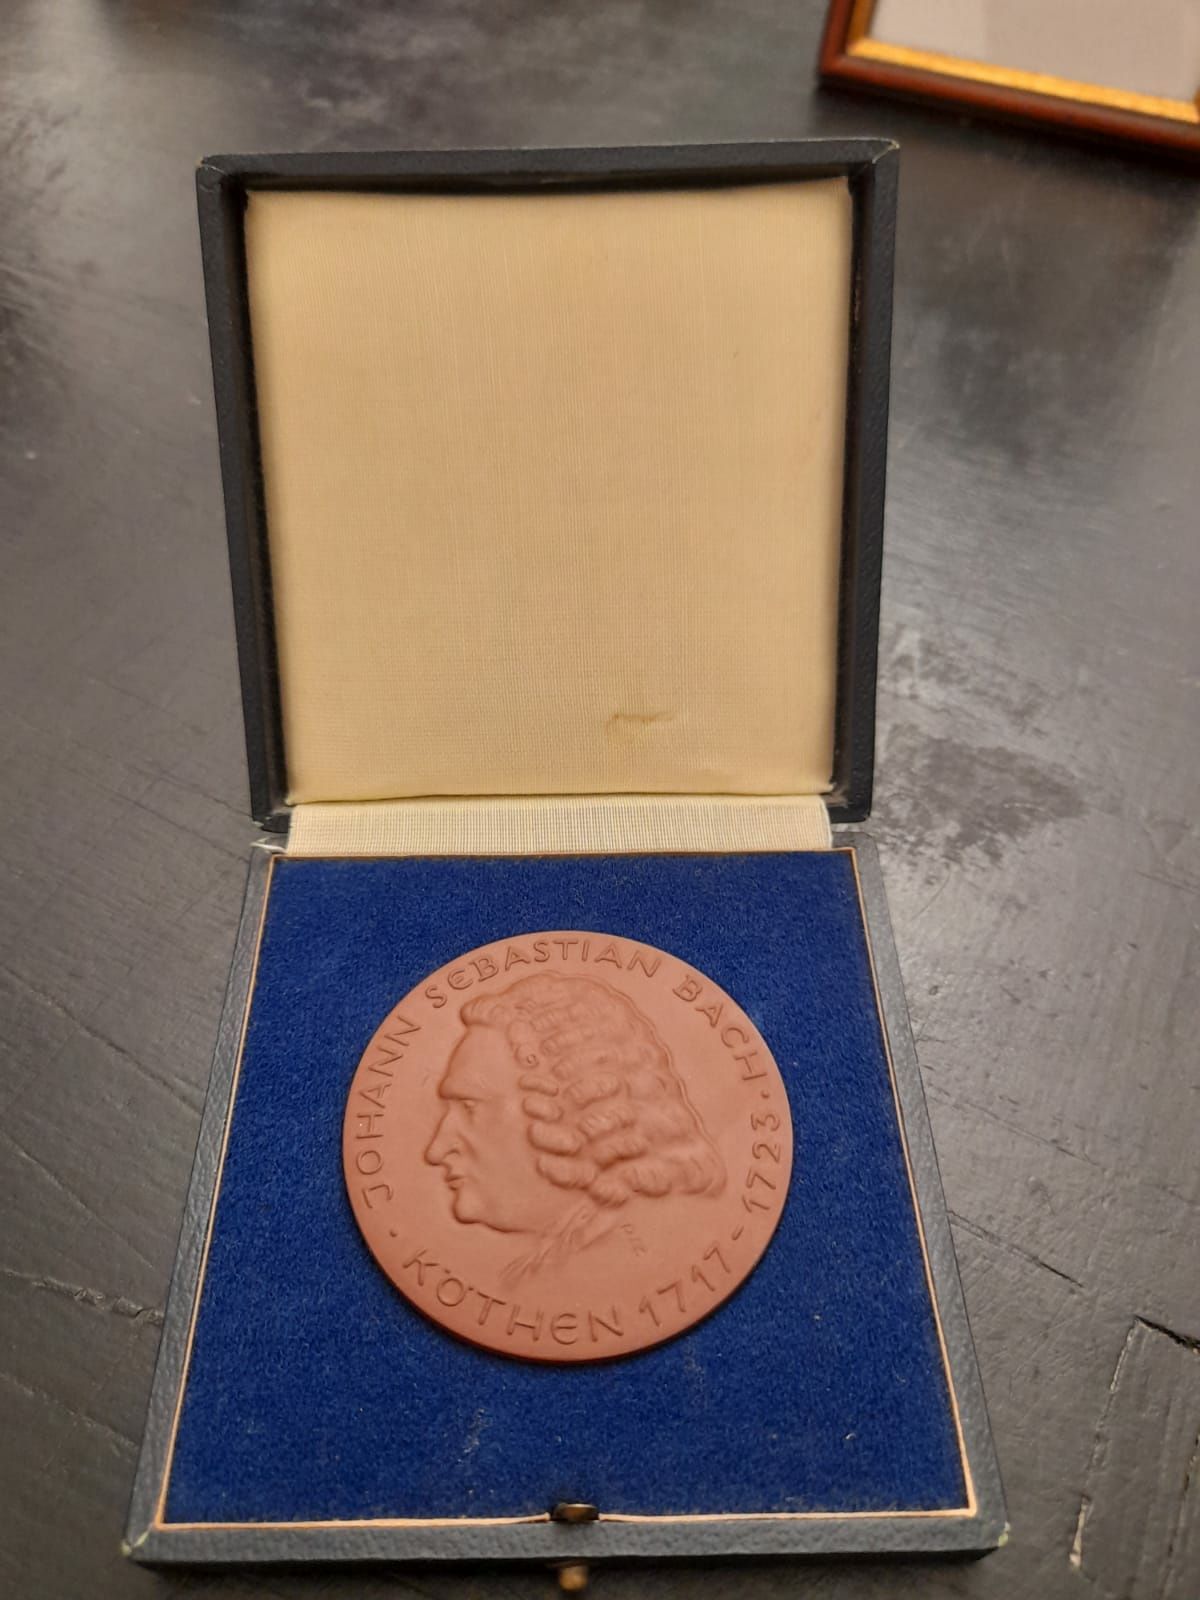 Medalie Meissen veche